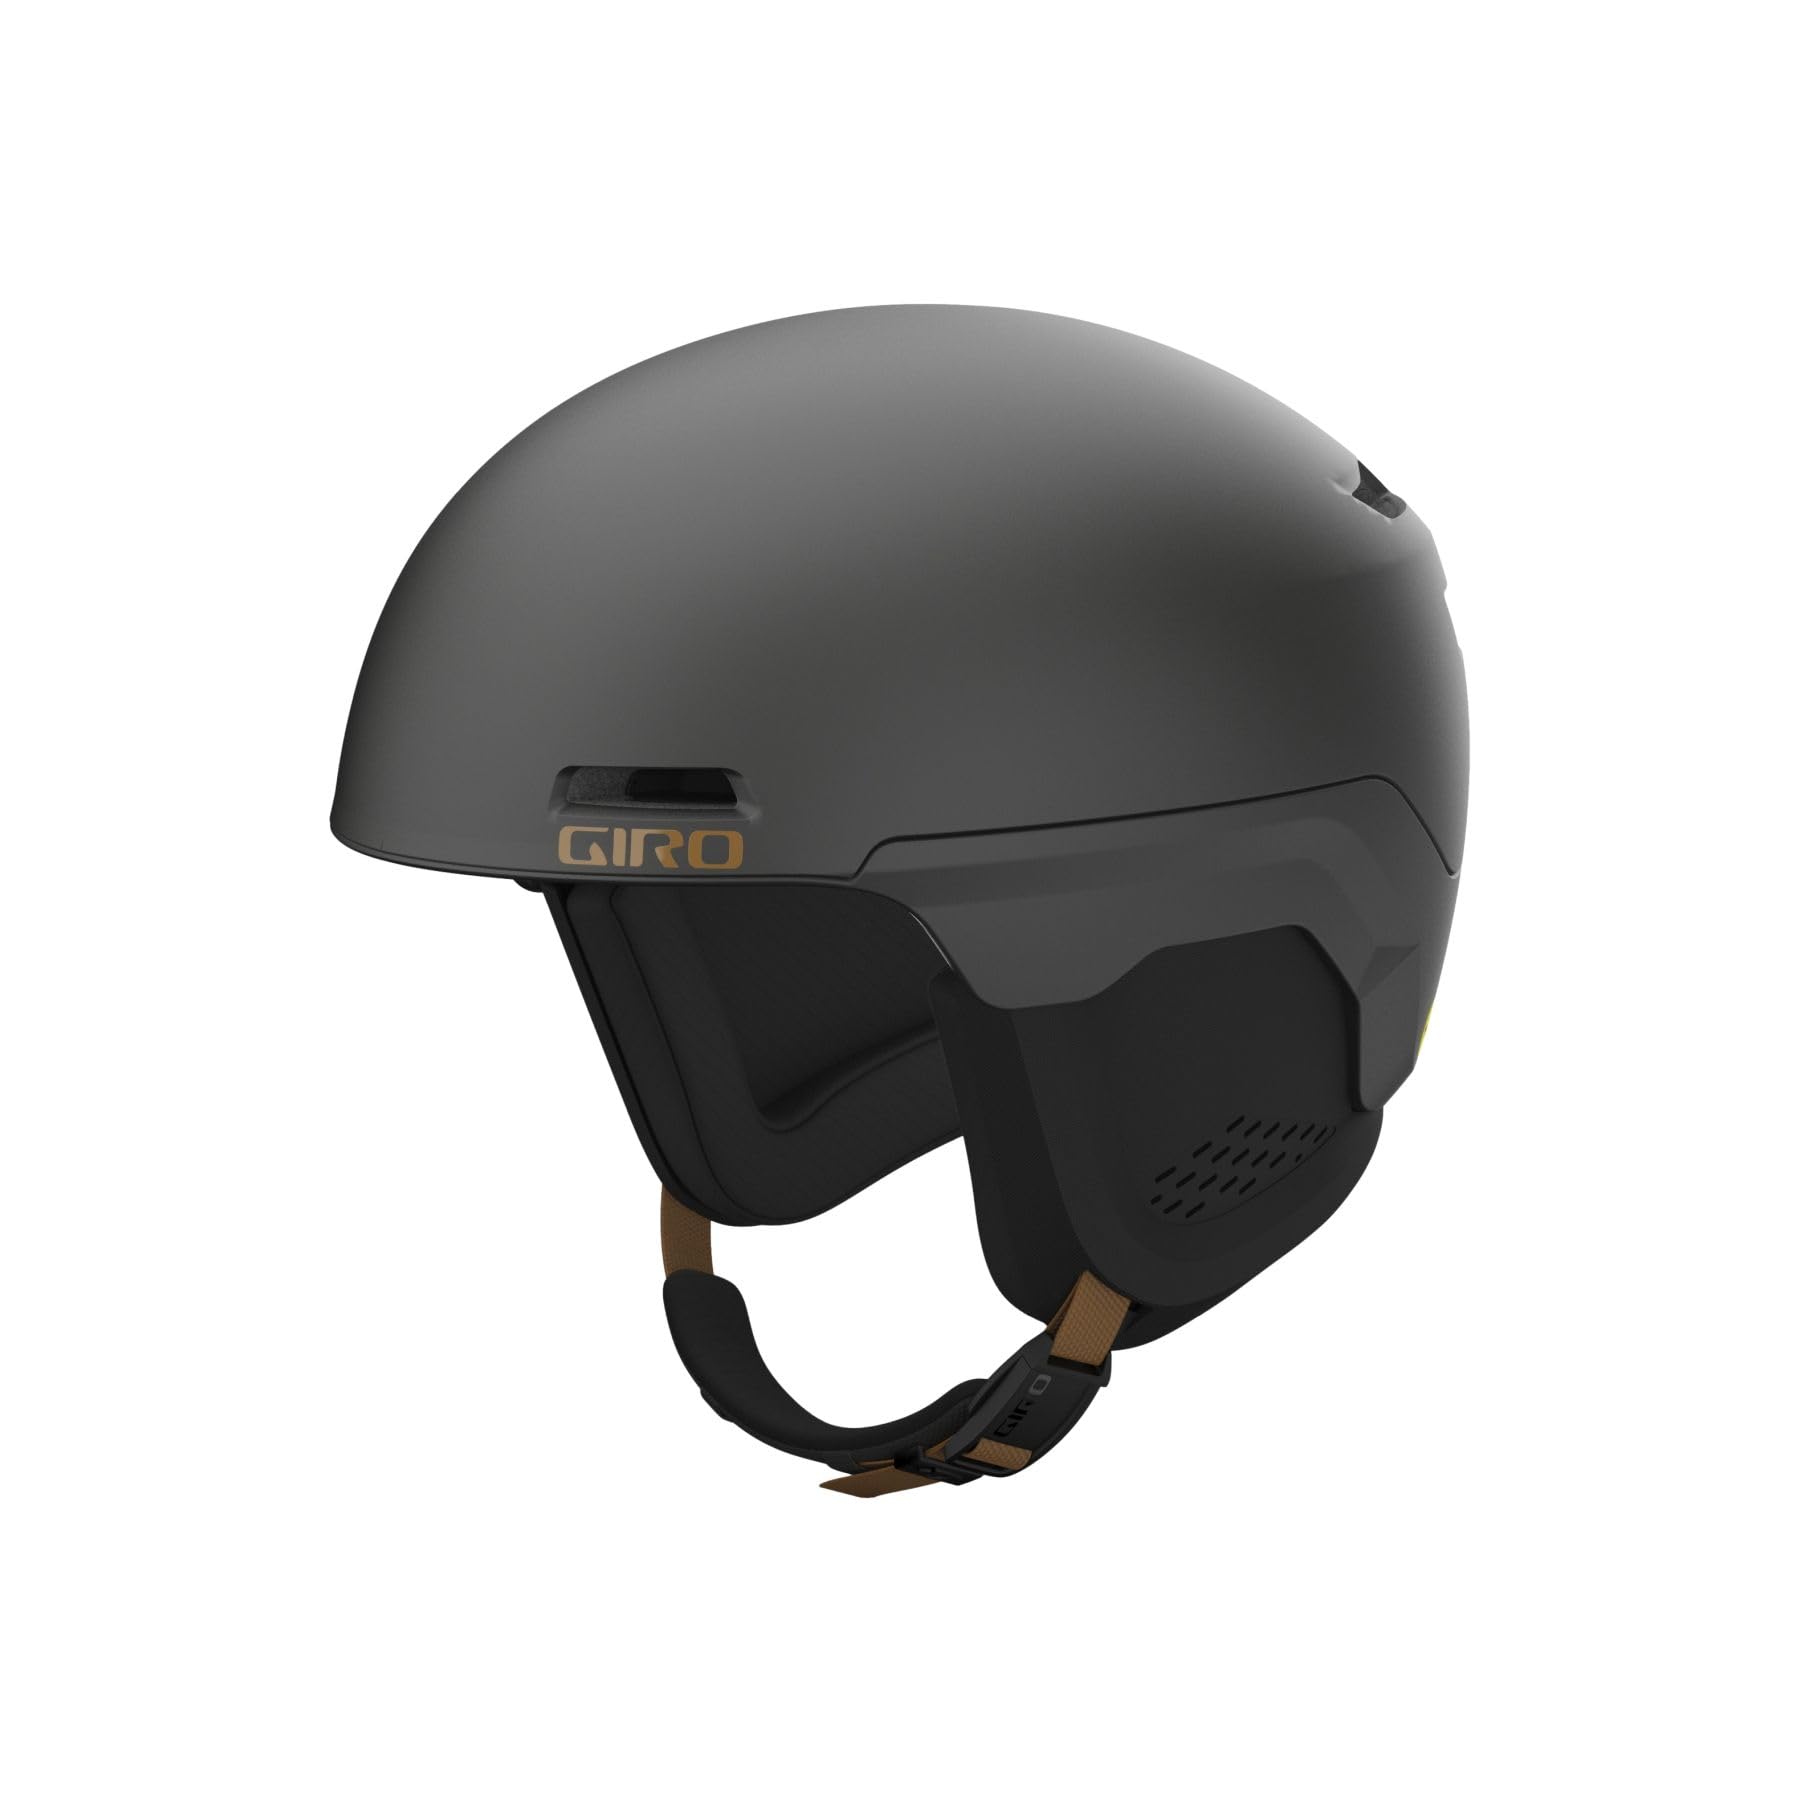 Giro Owen Spherical Ski Helmet - Snowboarding Helmet for Men Women and Youth - Metallic Coal Tan - L 59-62.5cm並行輸入